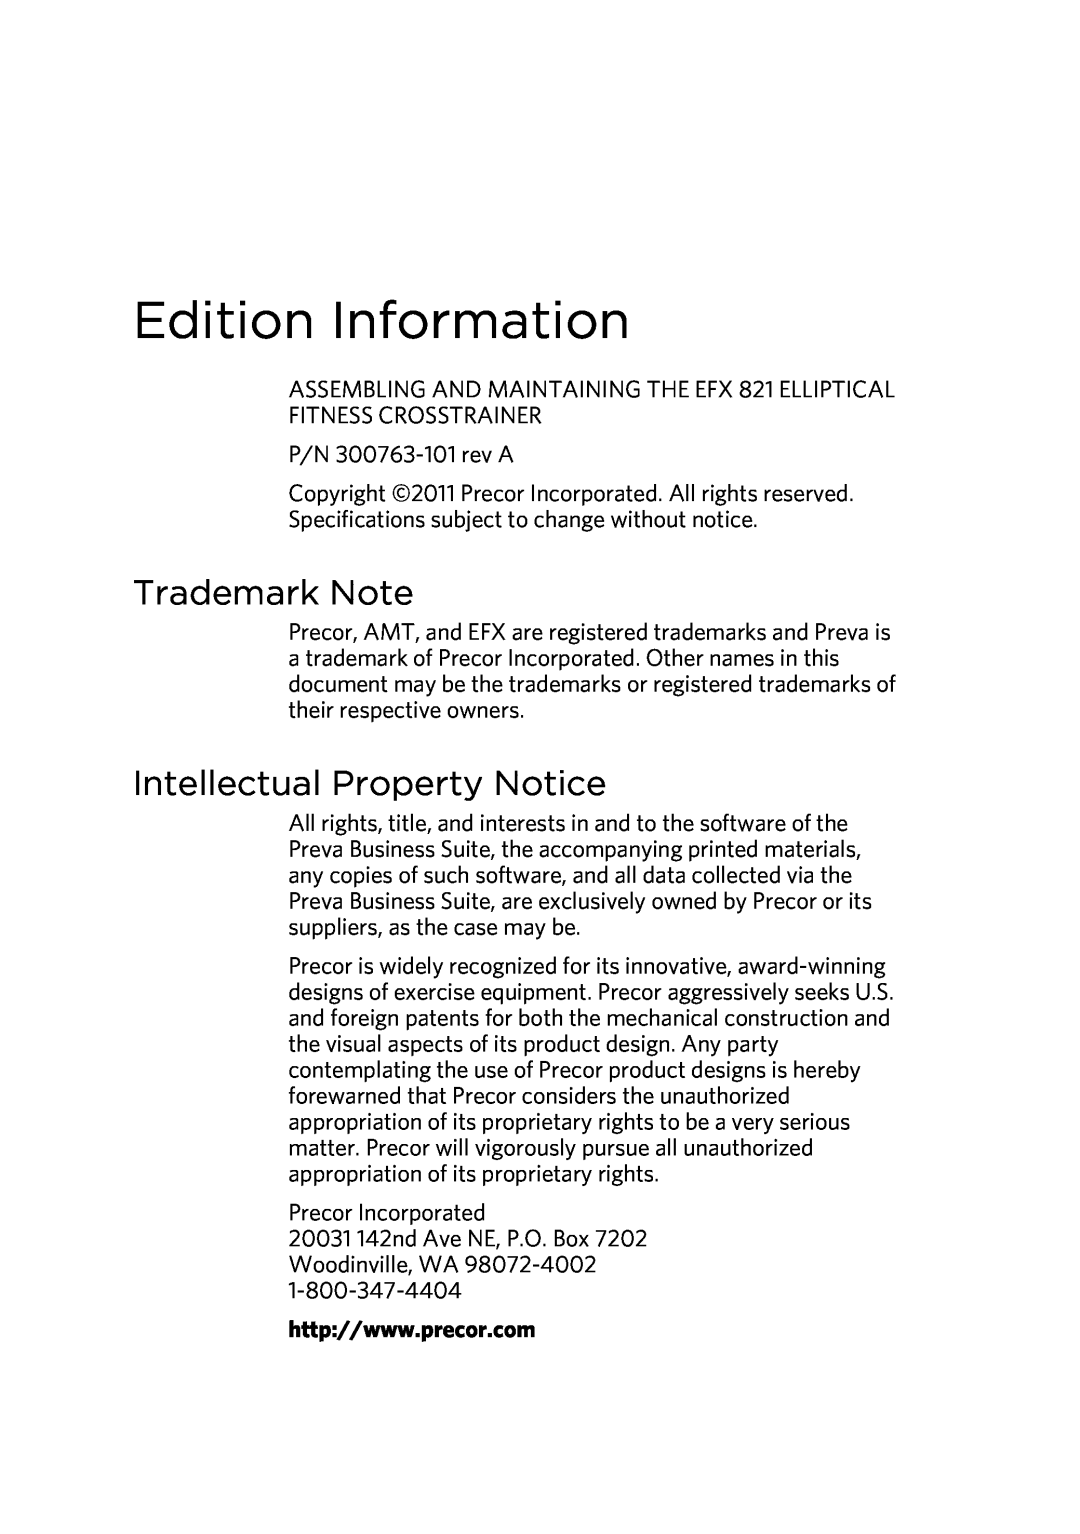 Precor 300753-201 manual Edition Information, Trademark Note, Intellectual Property Notice 